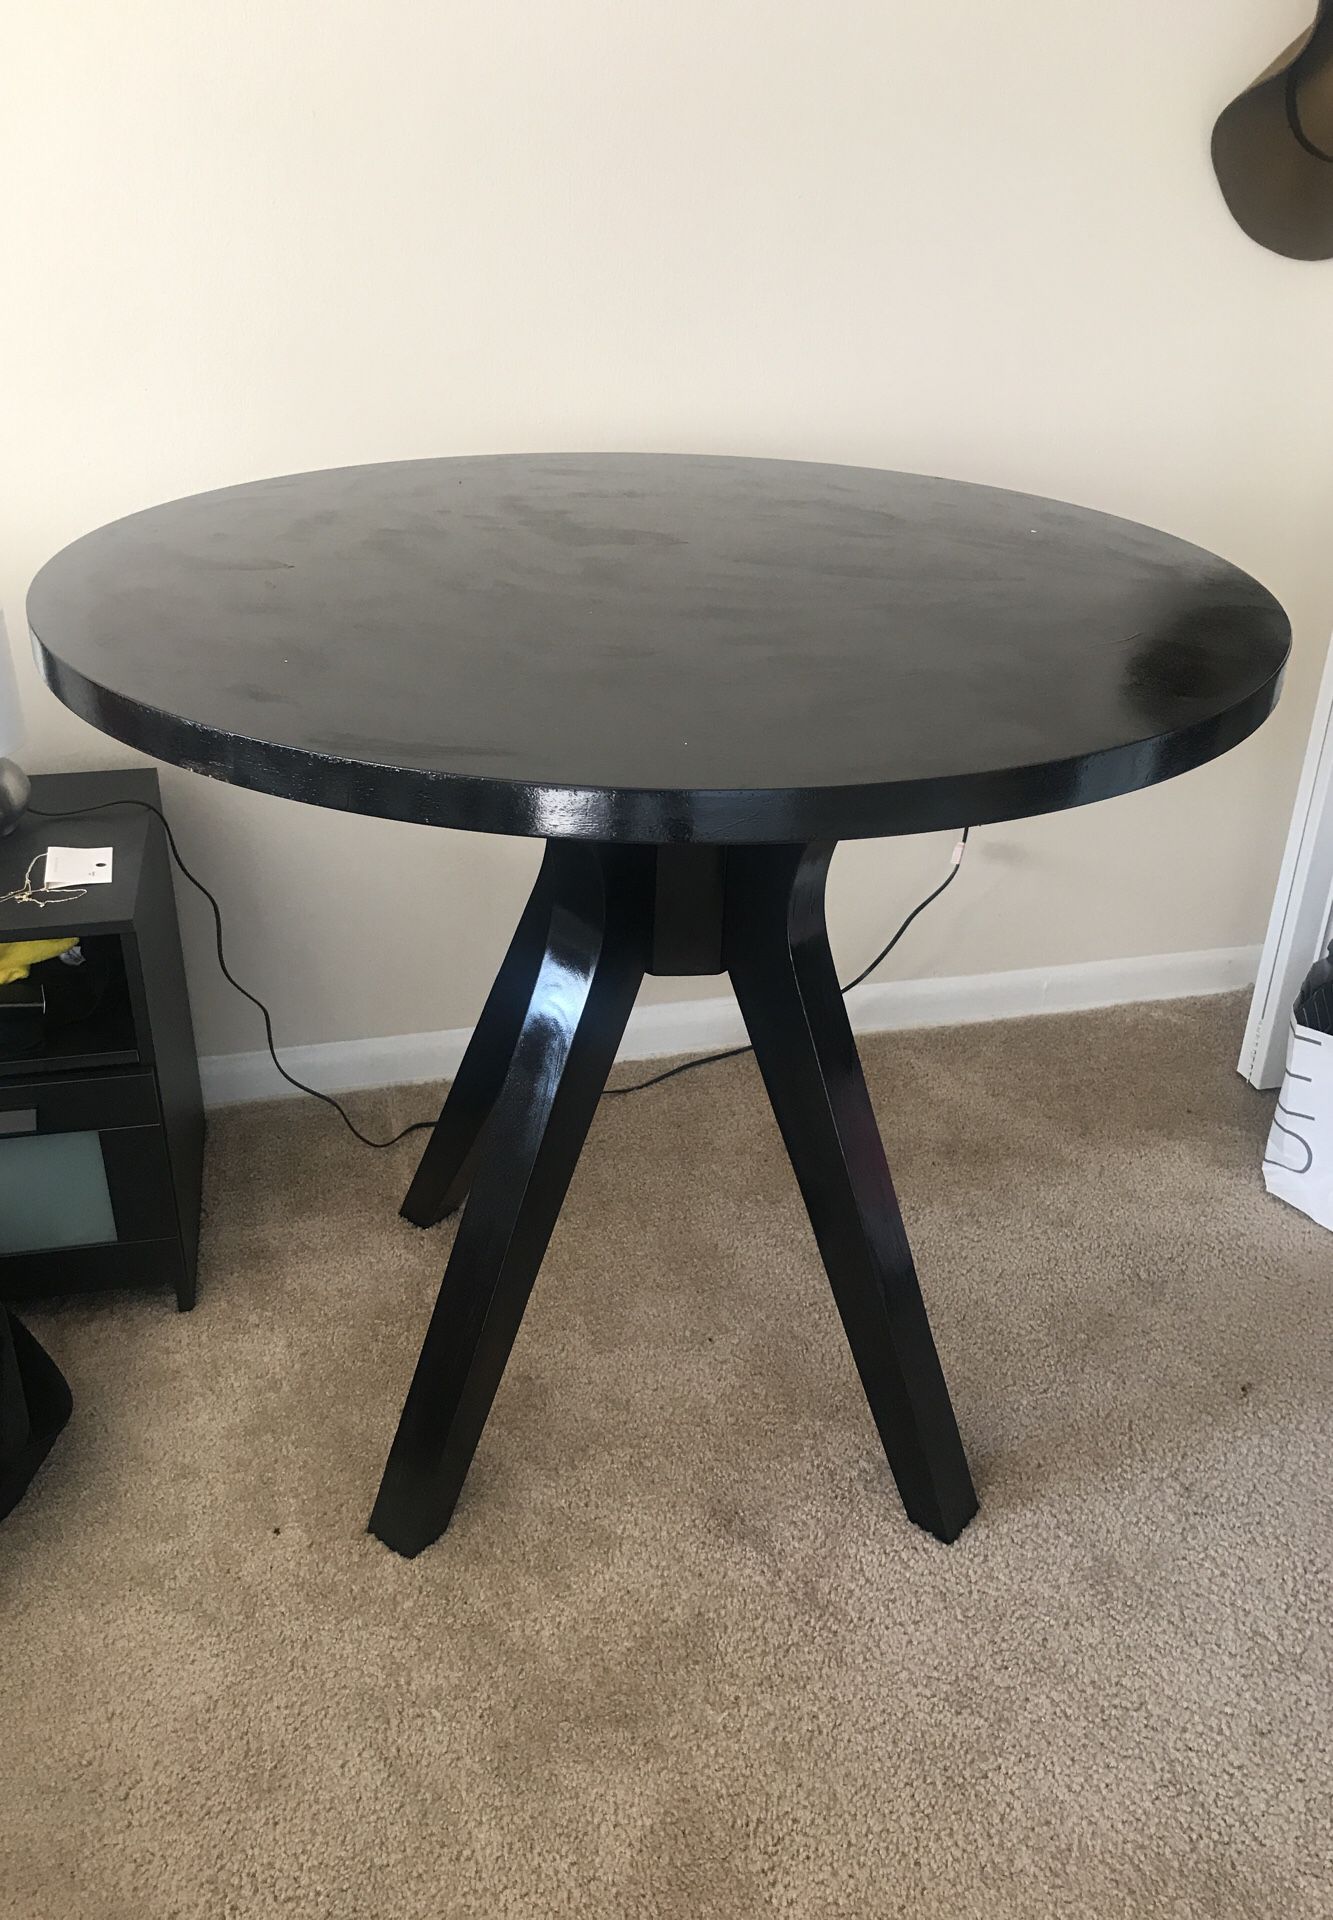 Cute black polished table